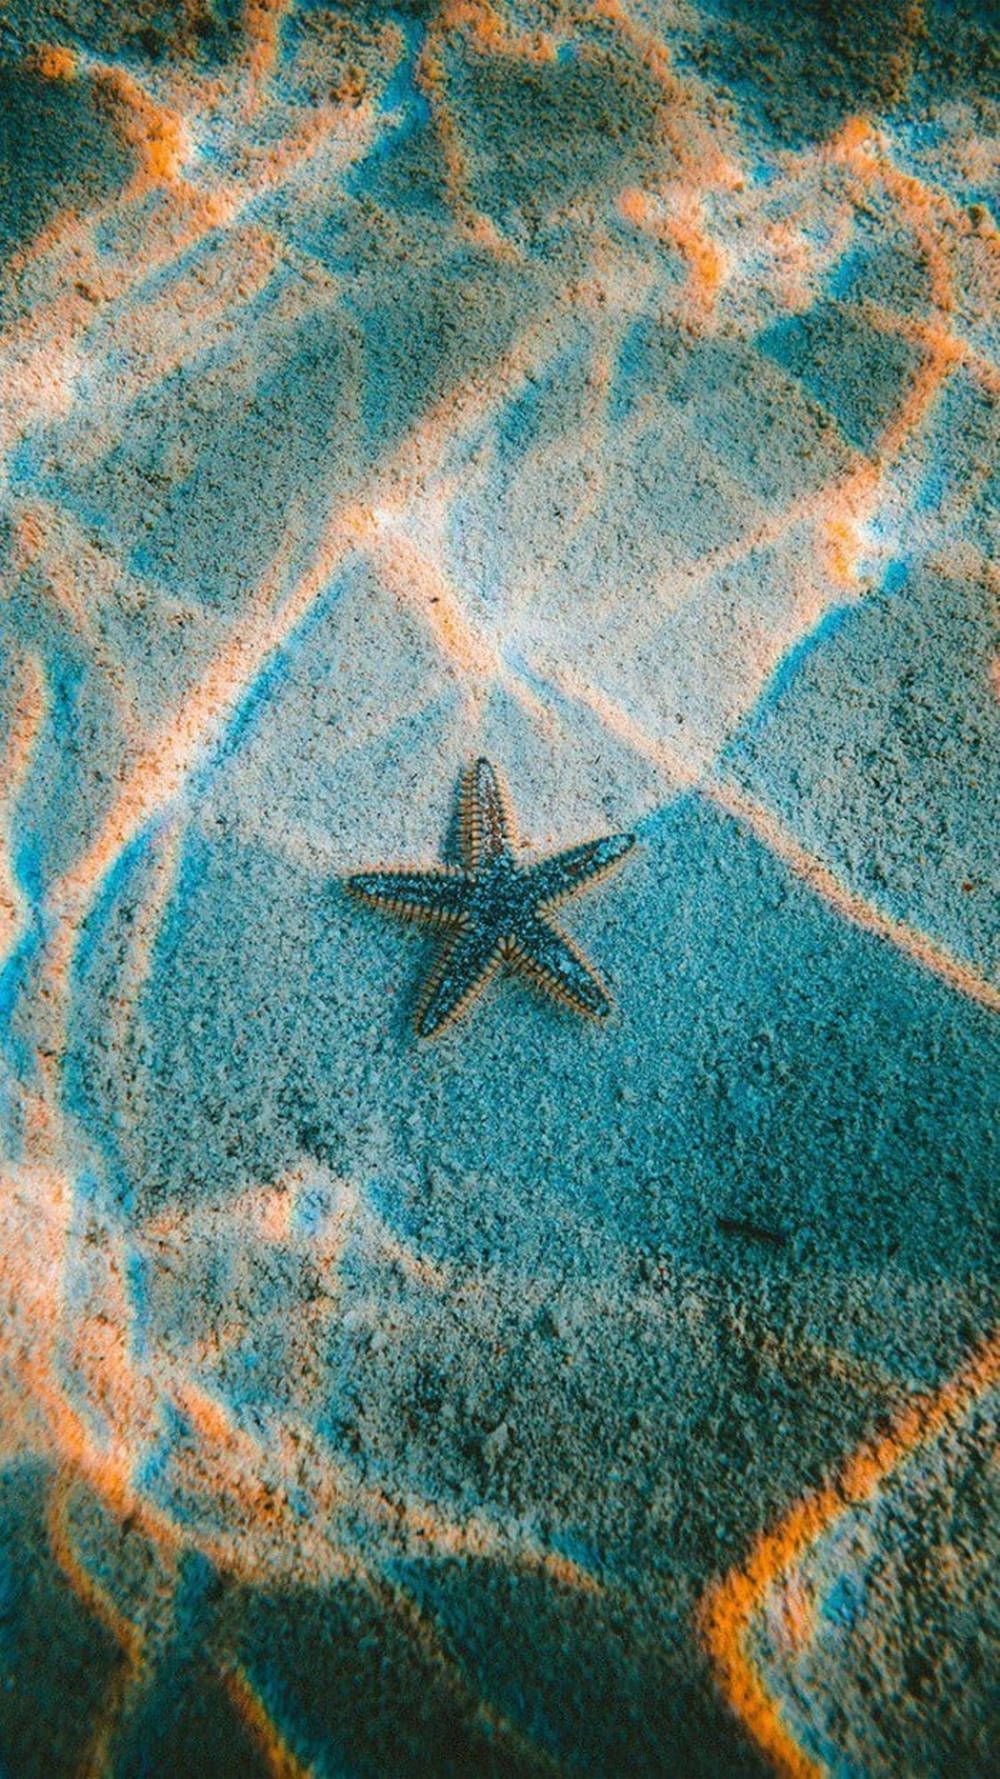 A starfish in the sand - Starfish